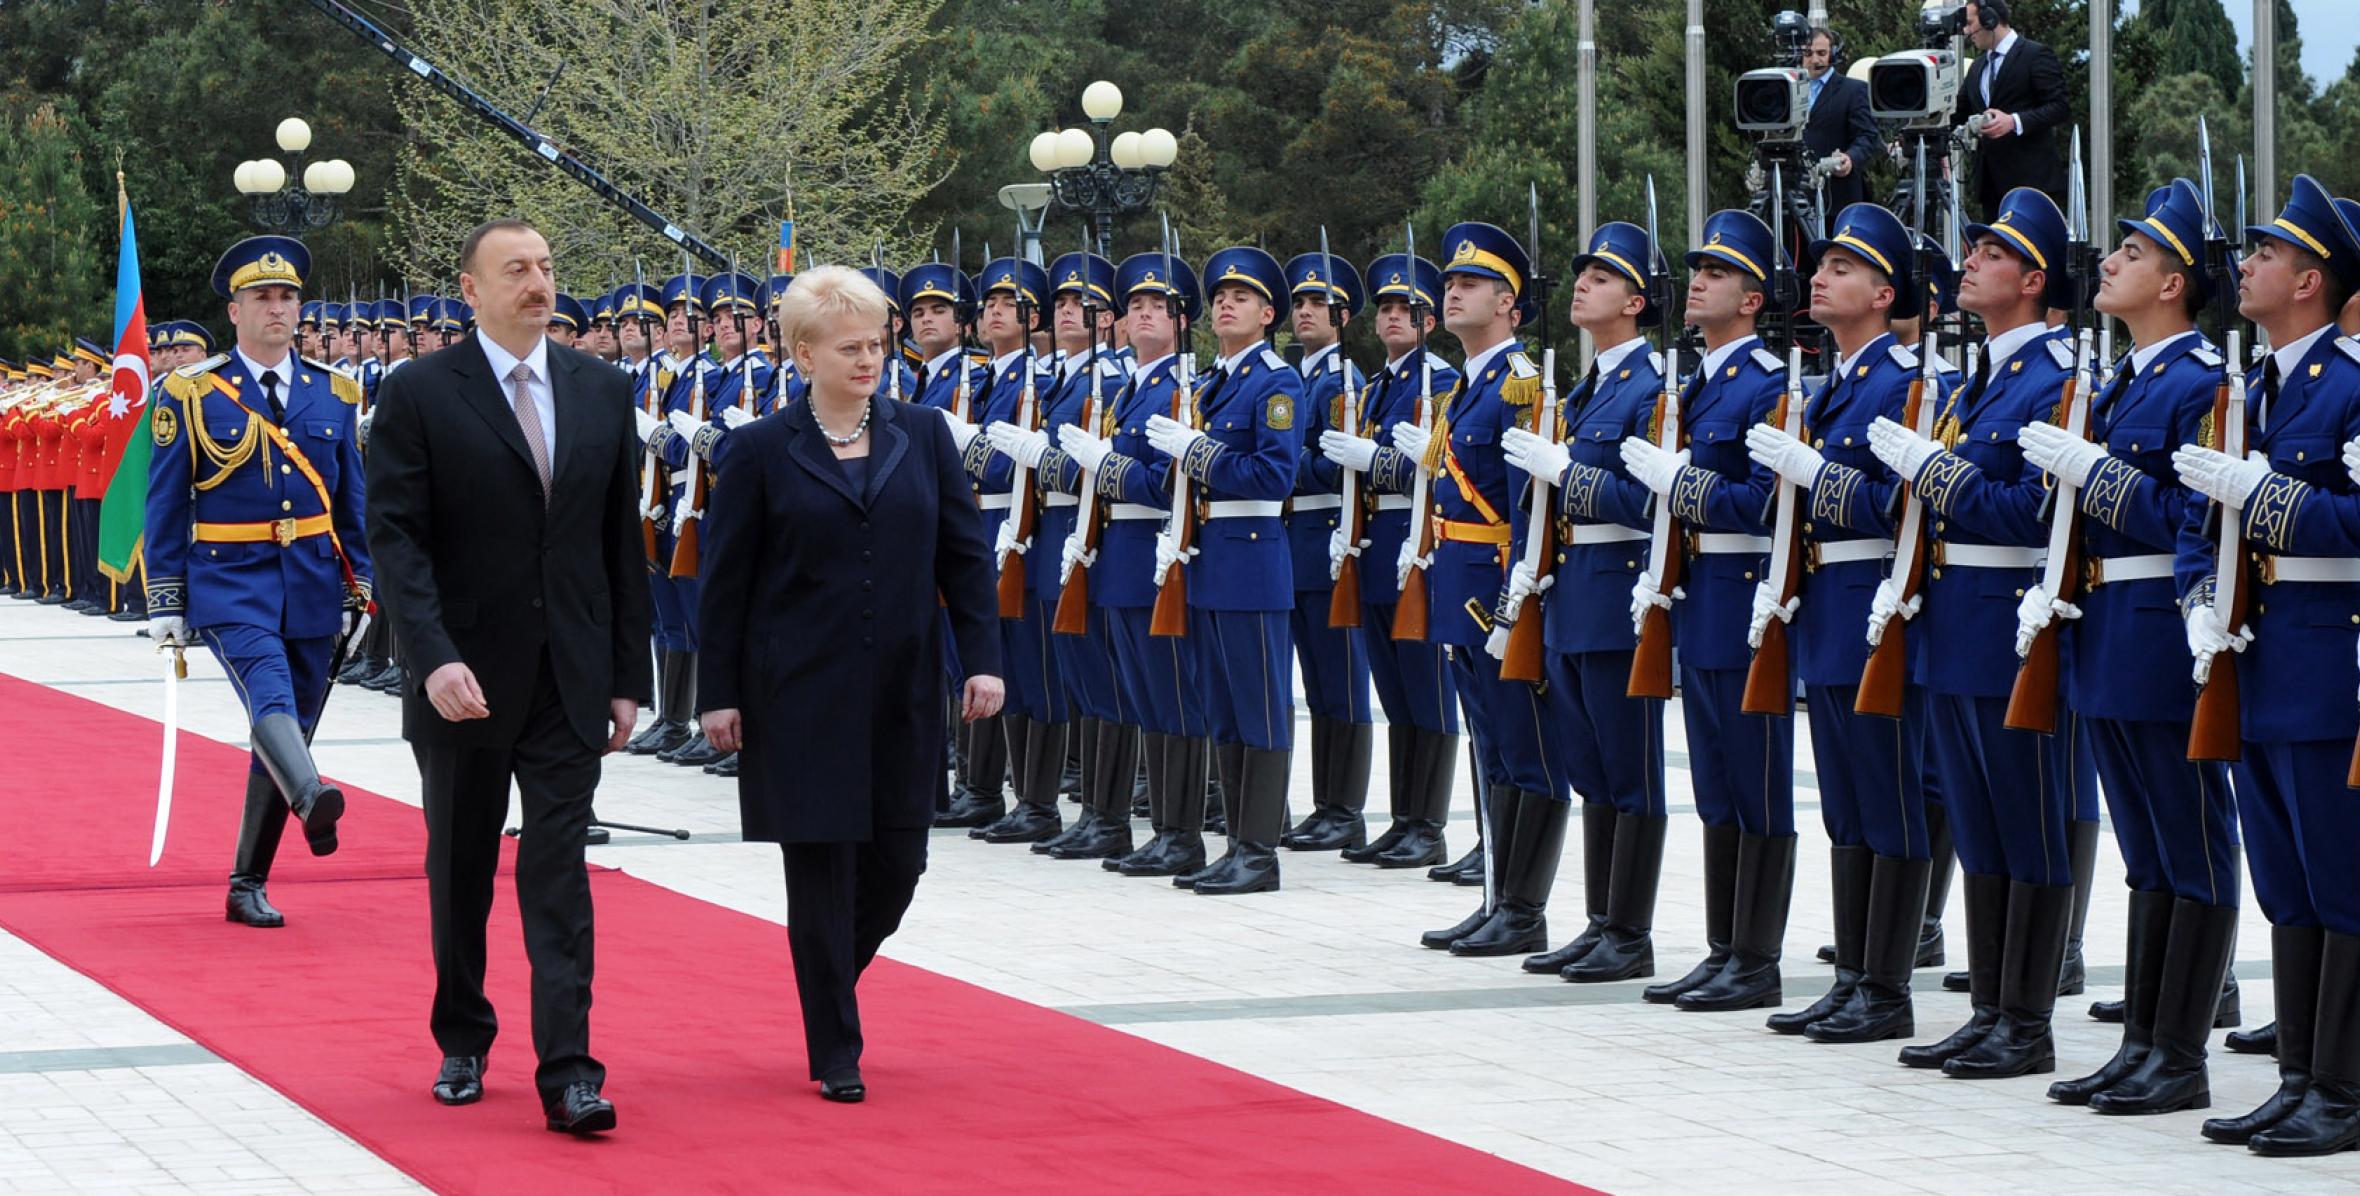 Madam Dalia Grybauskaitė, President of the Republic of Lithuania pays an official visit to the Republic of Azerbaijan